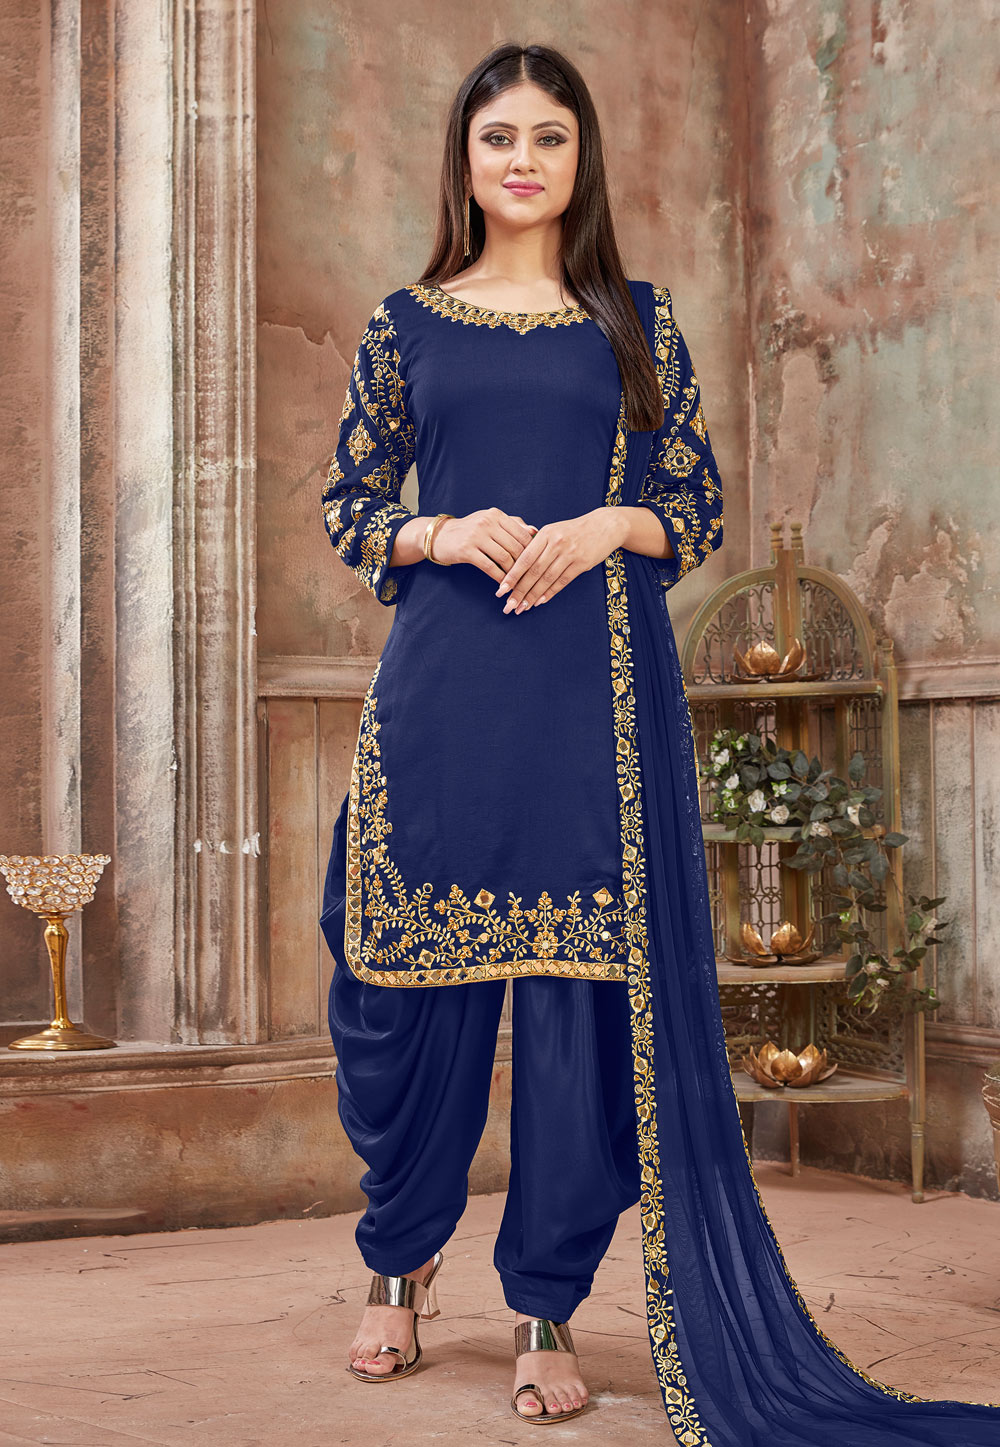 Punjabi Suit - Upto 50% to 80% OFF on Latest Punjabi Salwar Suits 2021 &  Punjabi Dresses online at best prices - Flipkart.com